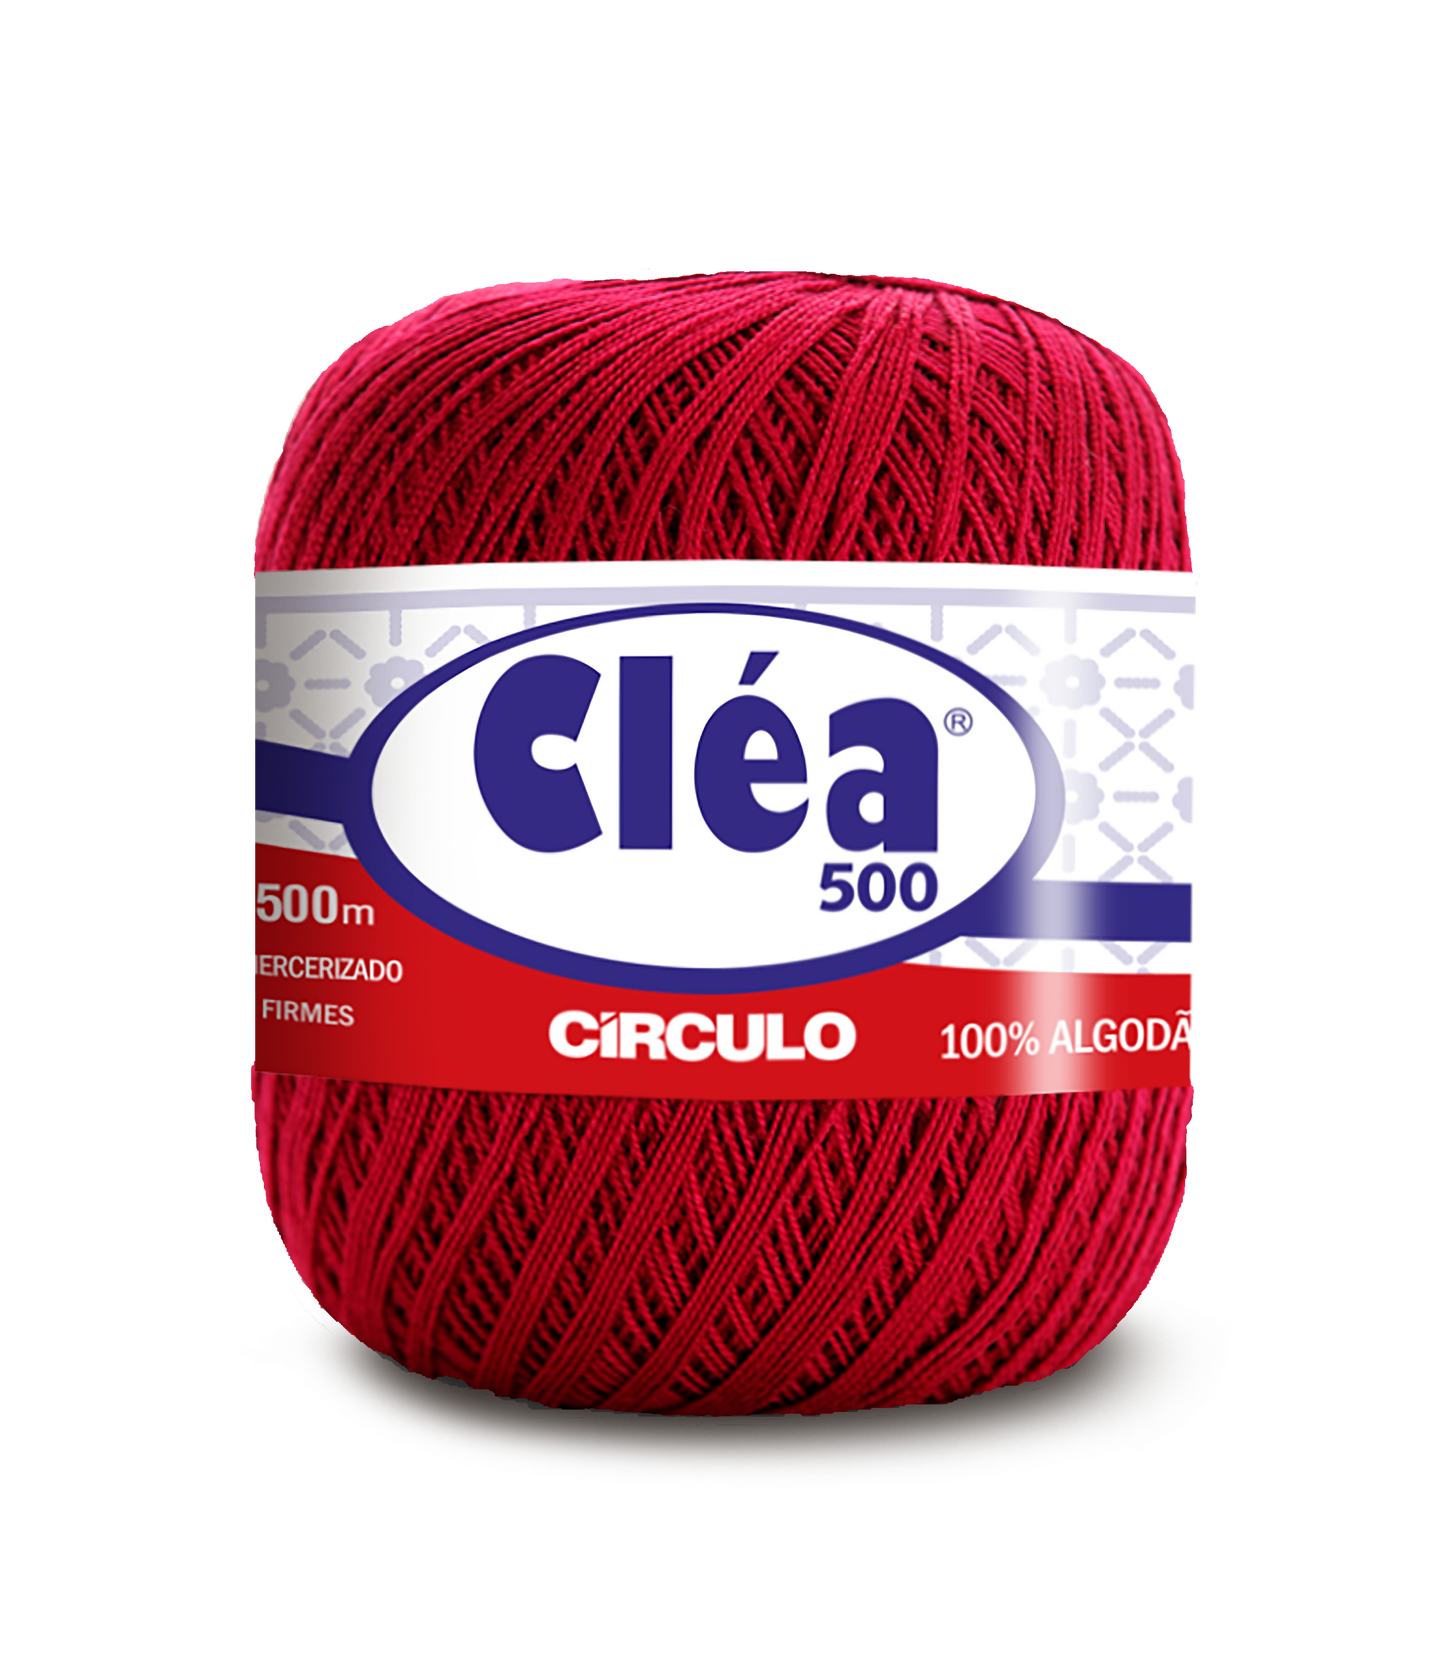 Circulo Clea 500 m 75 gr, 100% Mercerized Cotton Yarn (246042)